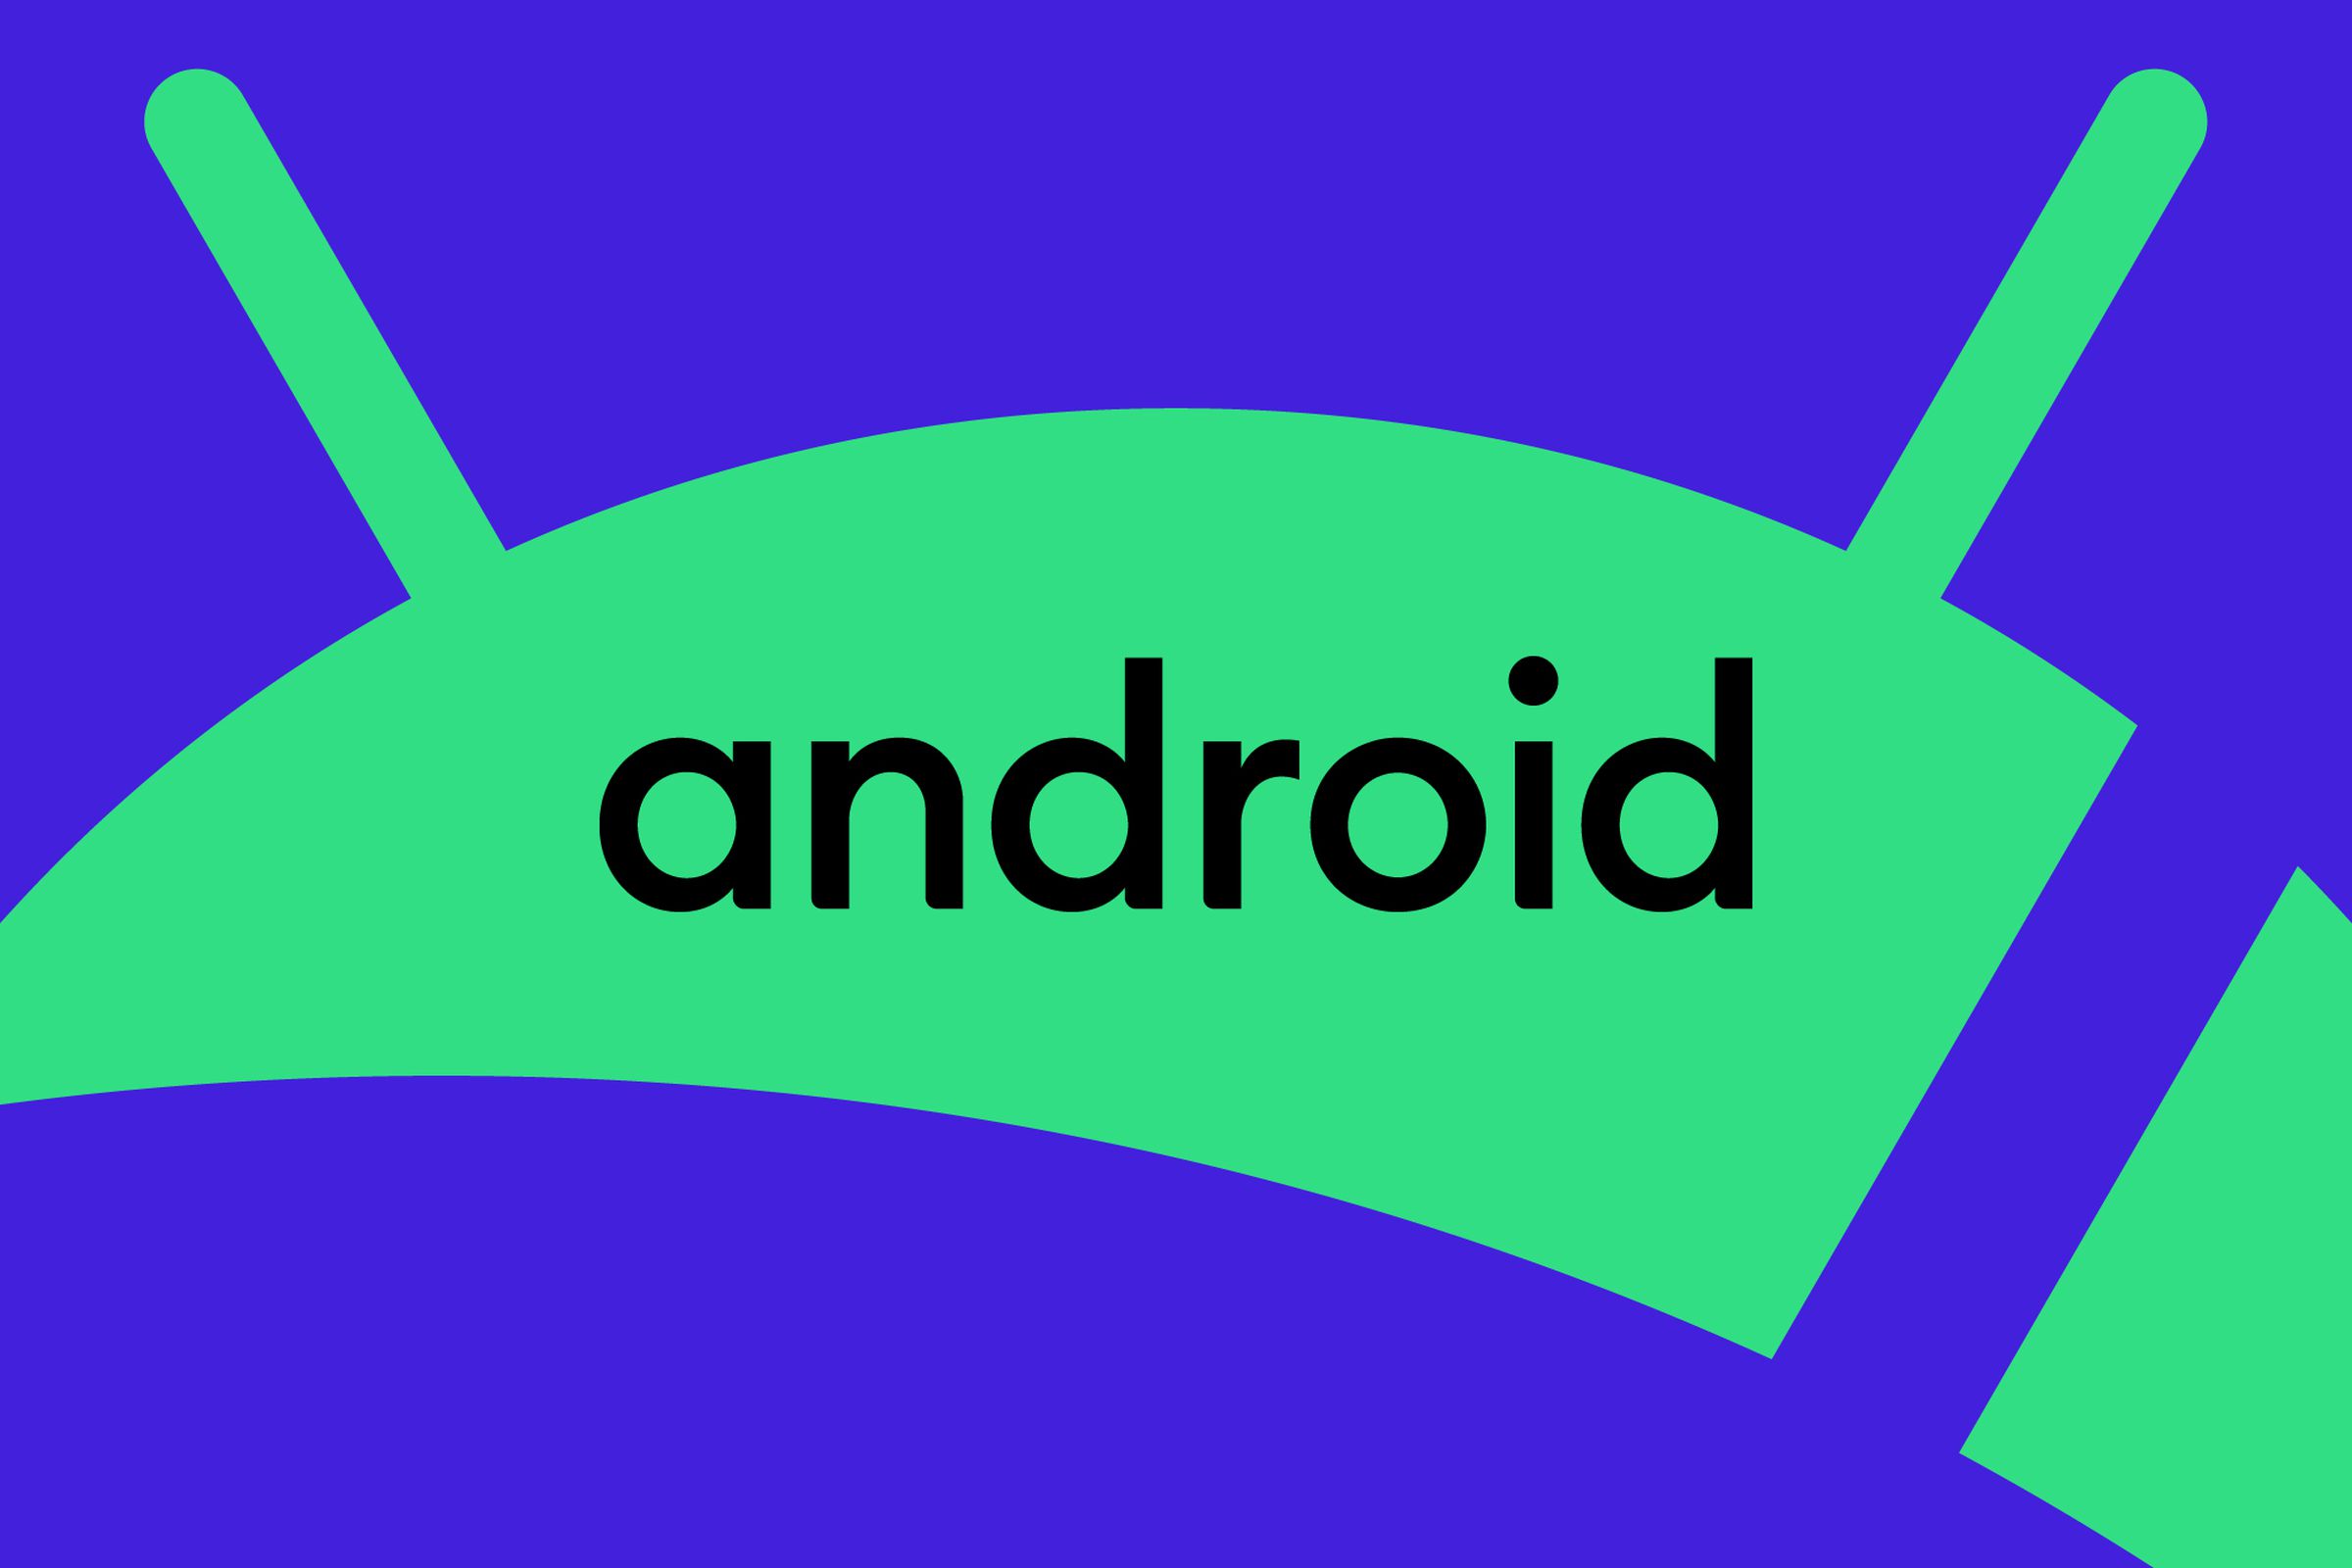 Logo Android dengan latar belakang gradasi hijau dan biru